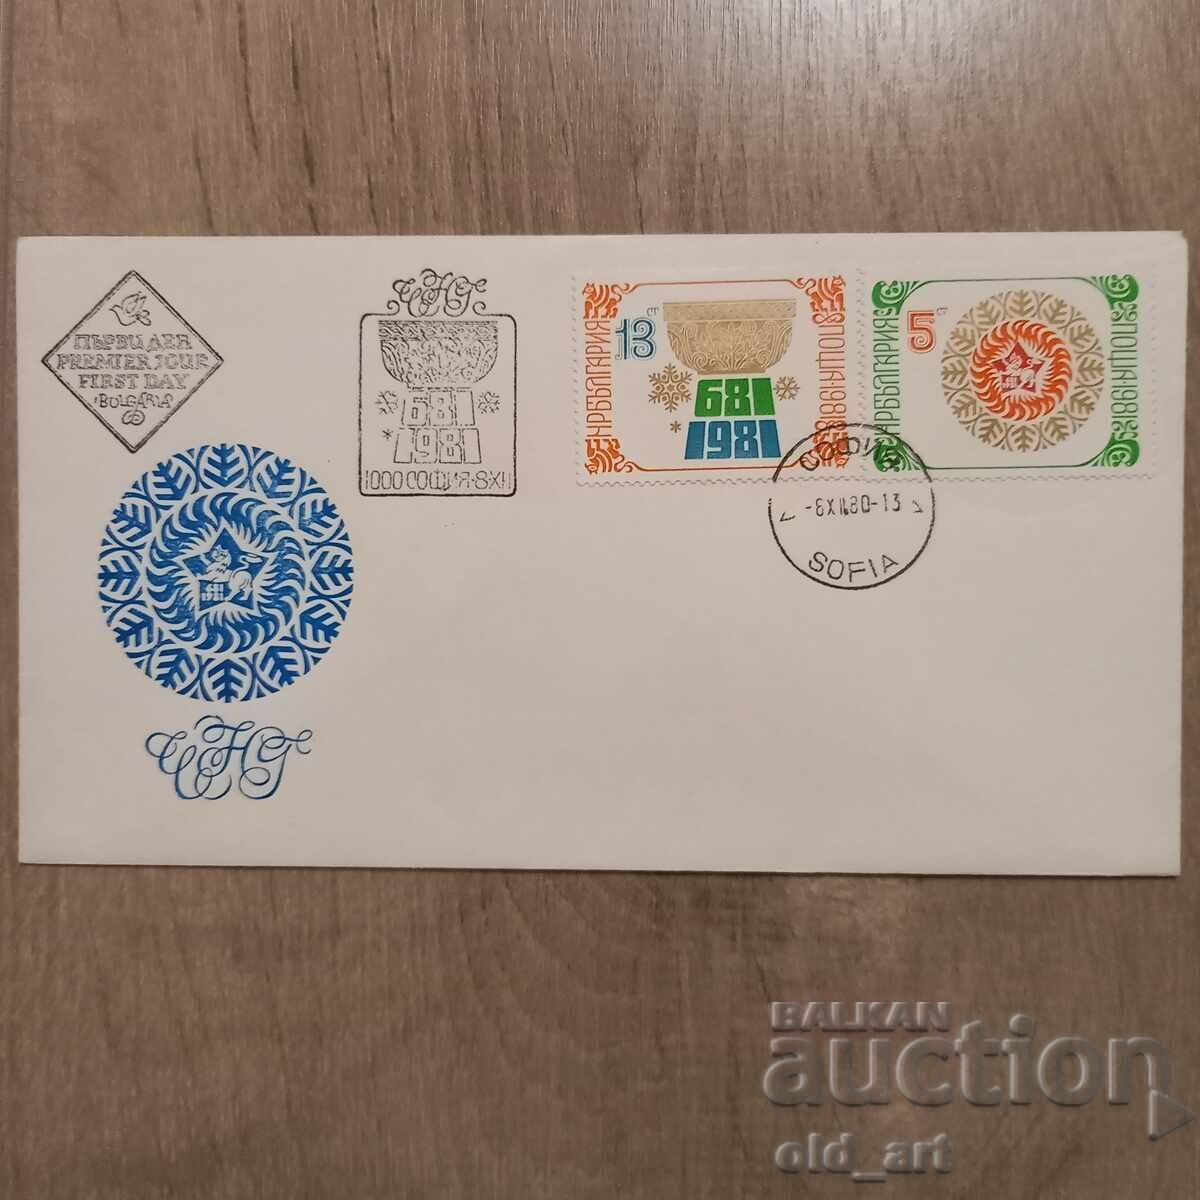 Postal envelope - ChNG 1981